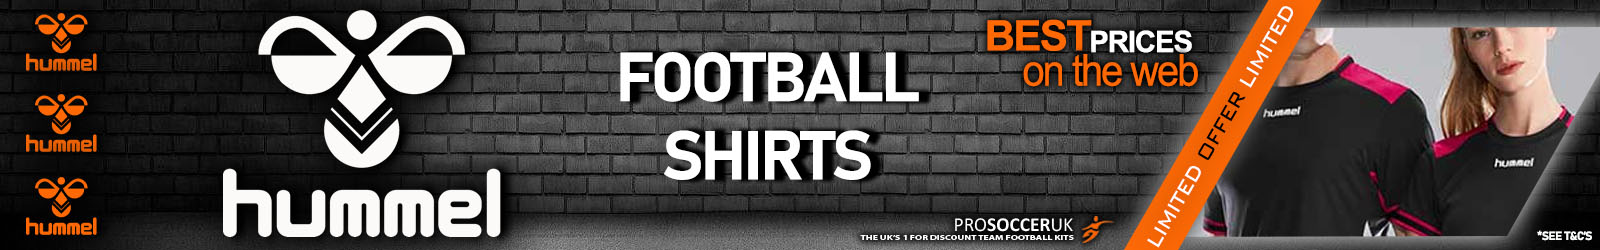 Hummel Football Shirts